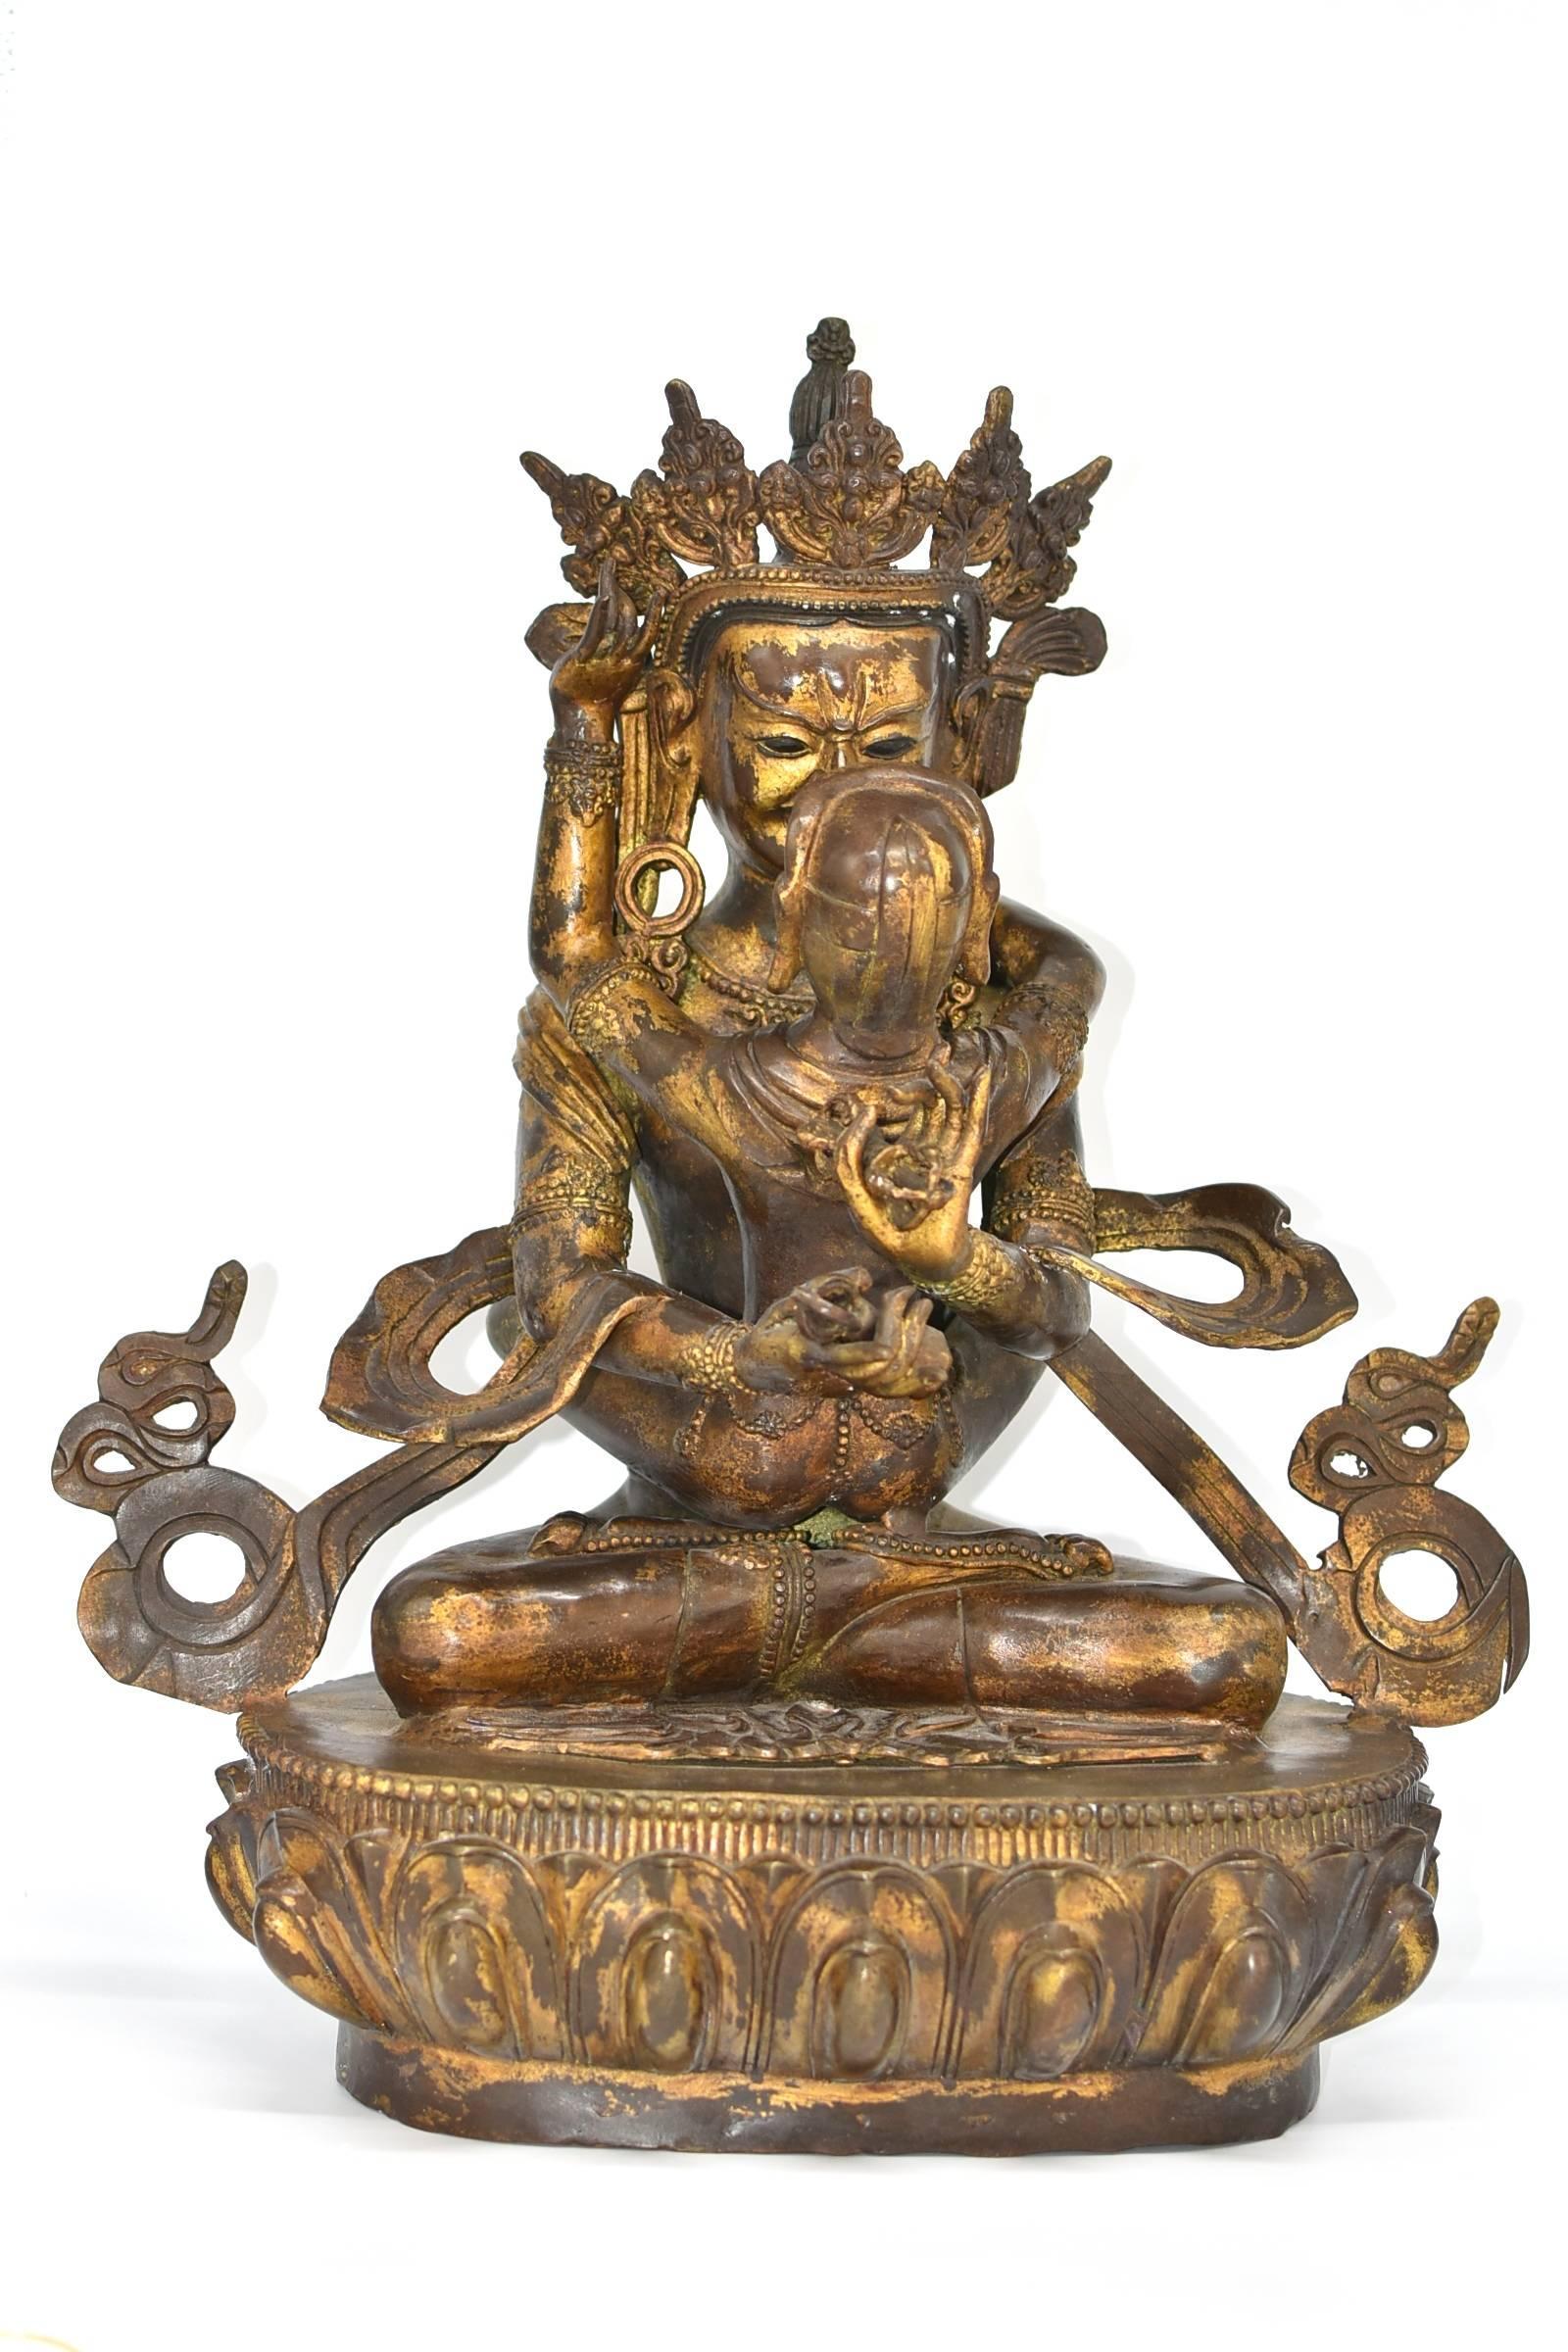 A rare, exquisite statue of the joined Tibetan Deities Yab-yum (in Tibetan 